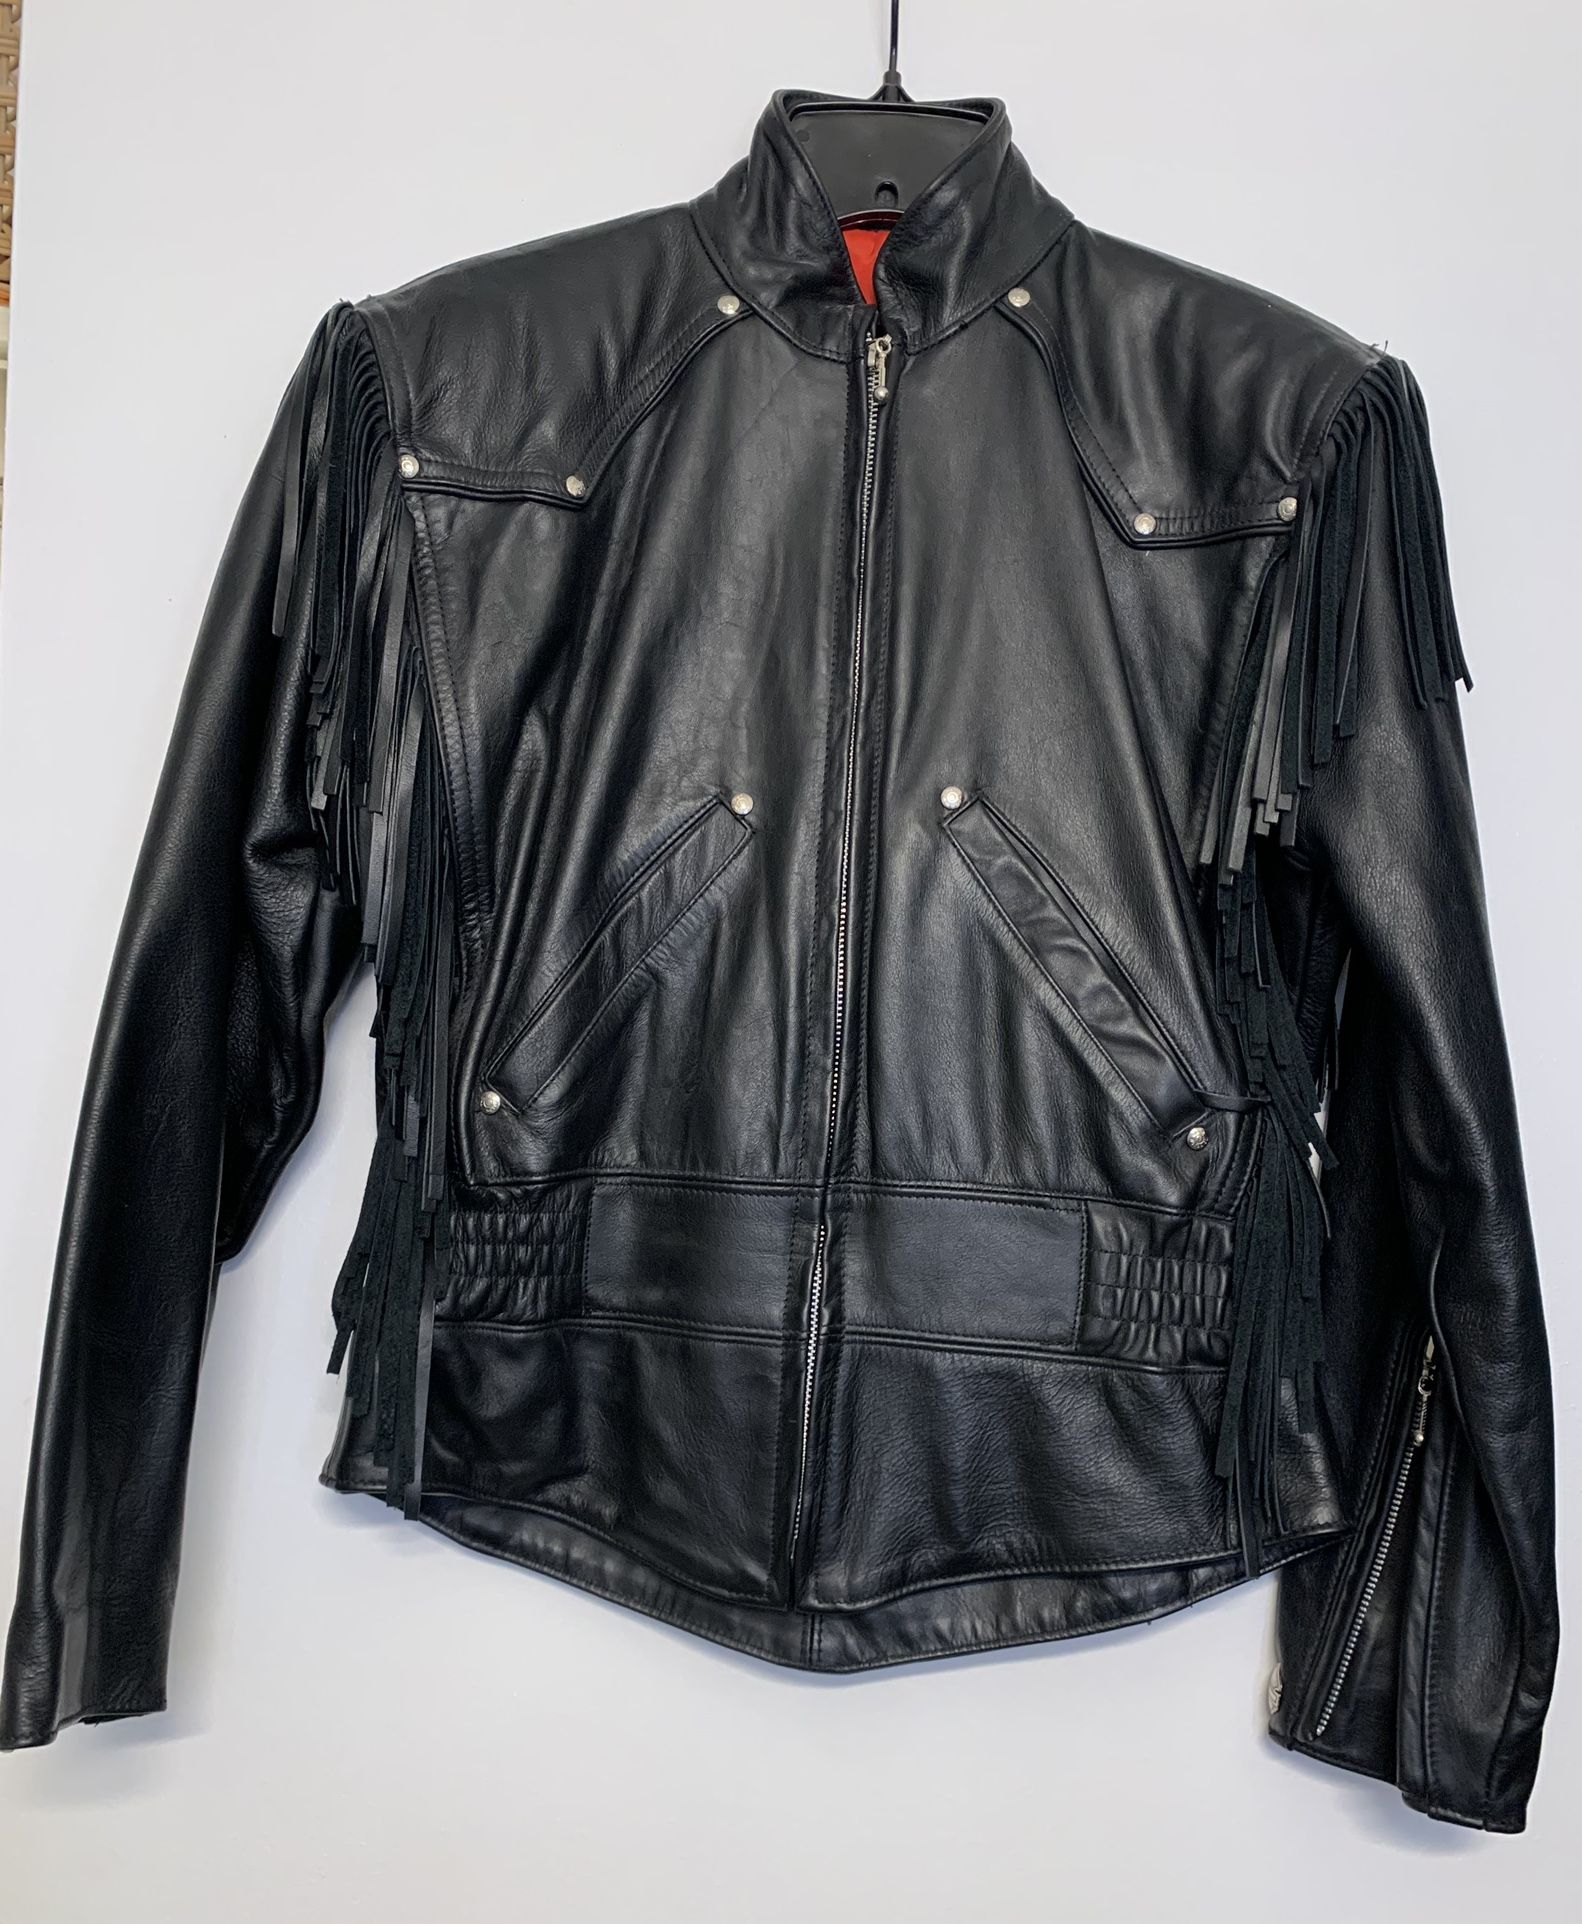 ** MINT Condition ** Vintage 90’s Harley Davidson Womens Leather Jacket, Fringe, XS (fits Size 8)